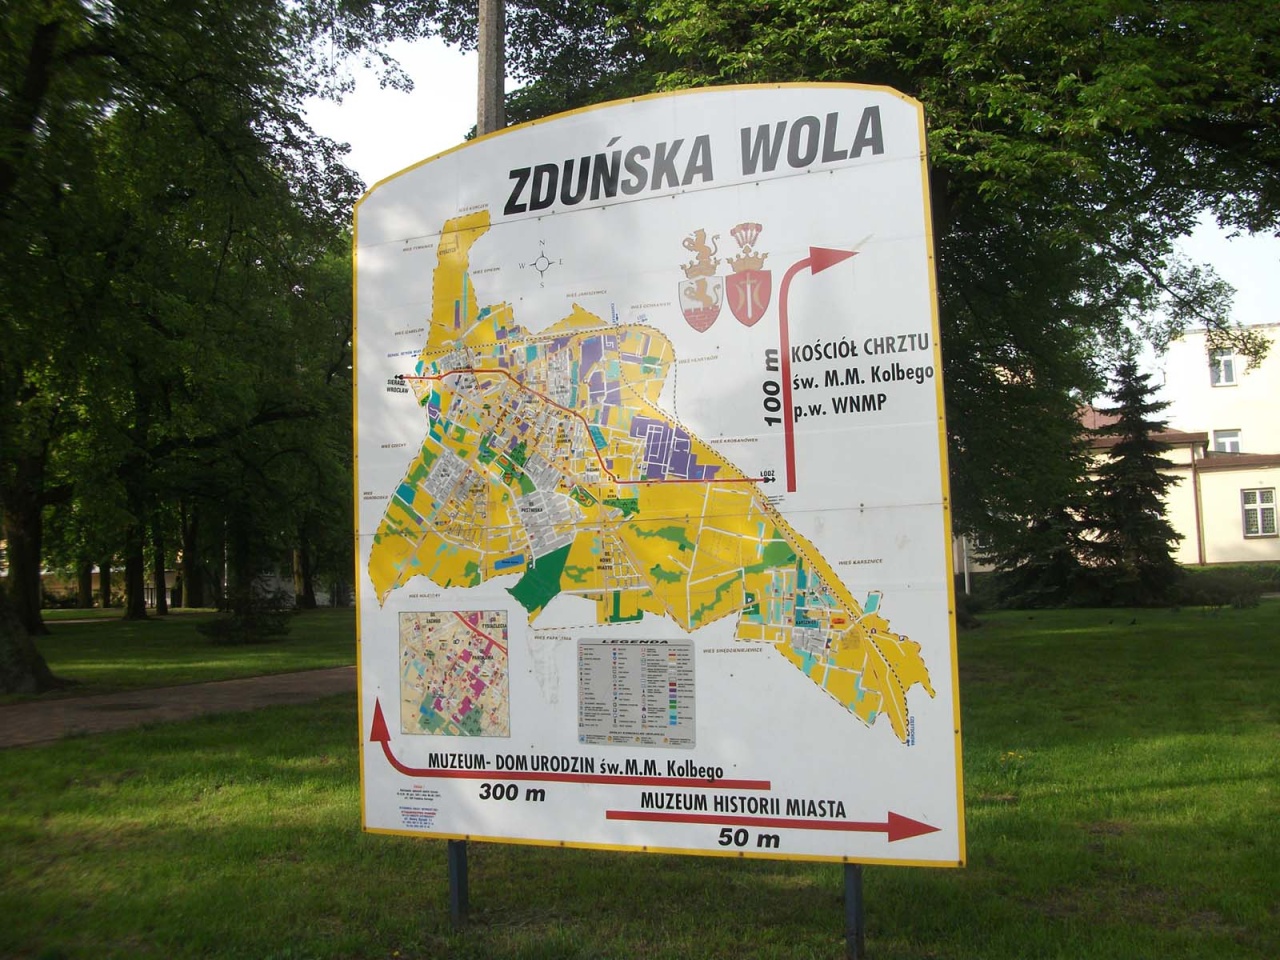  Lodz Voivodeship